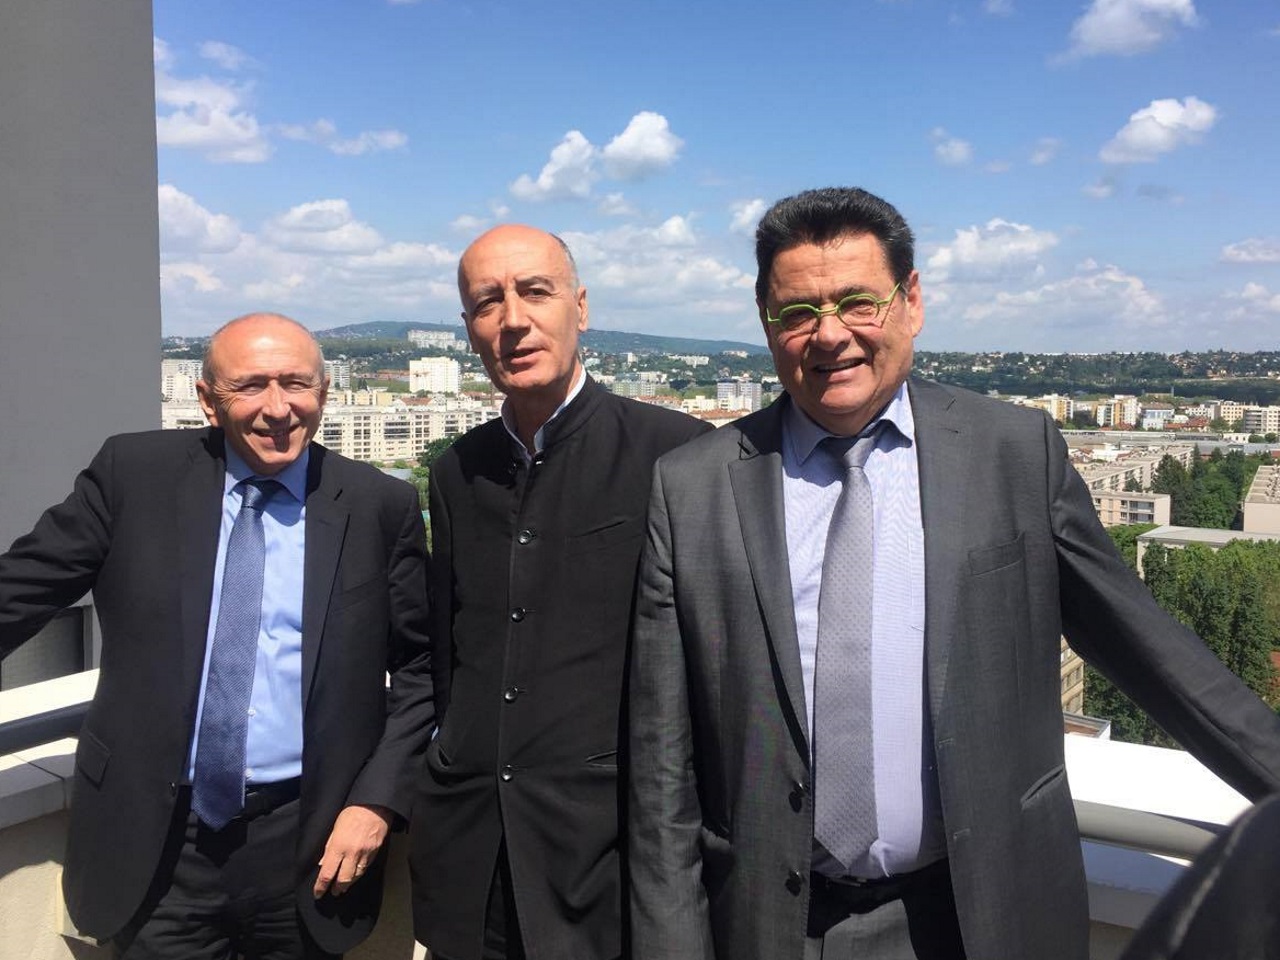 Gérard Collomb, Nicolas Michelin et Jean-Paul Bret - LyonMag